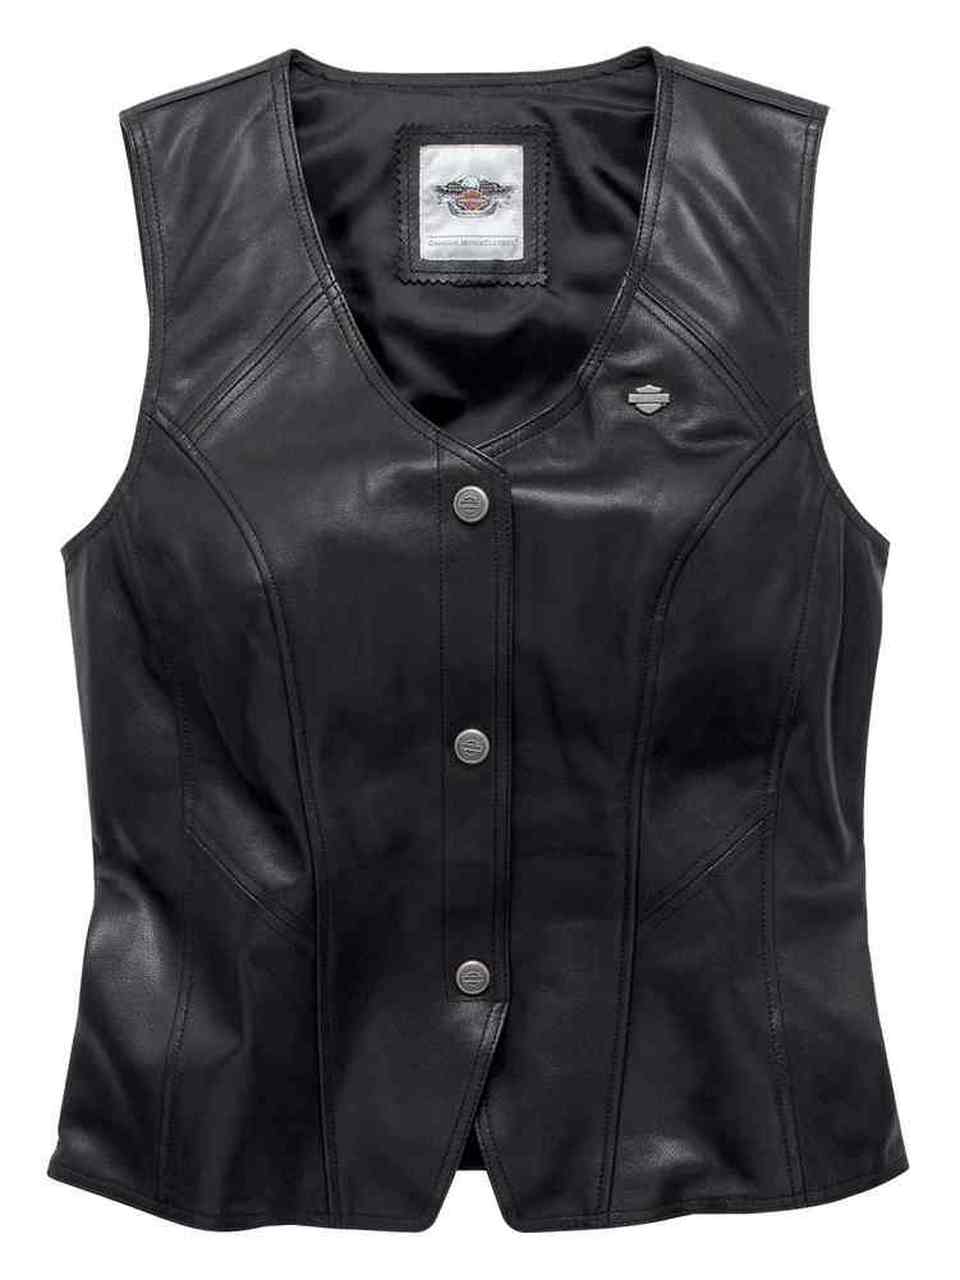 Harley-Davidson Women's Essentials Leather Riding Vest